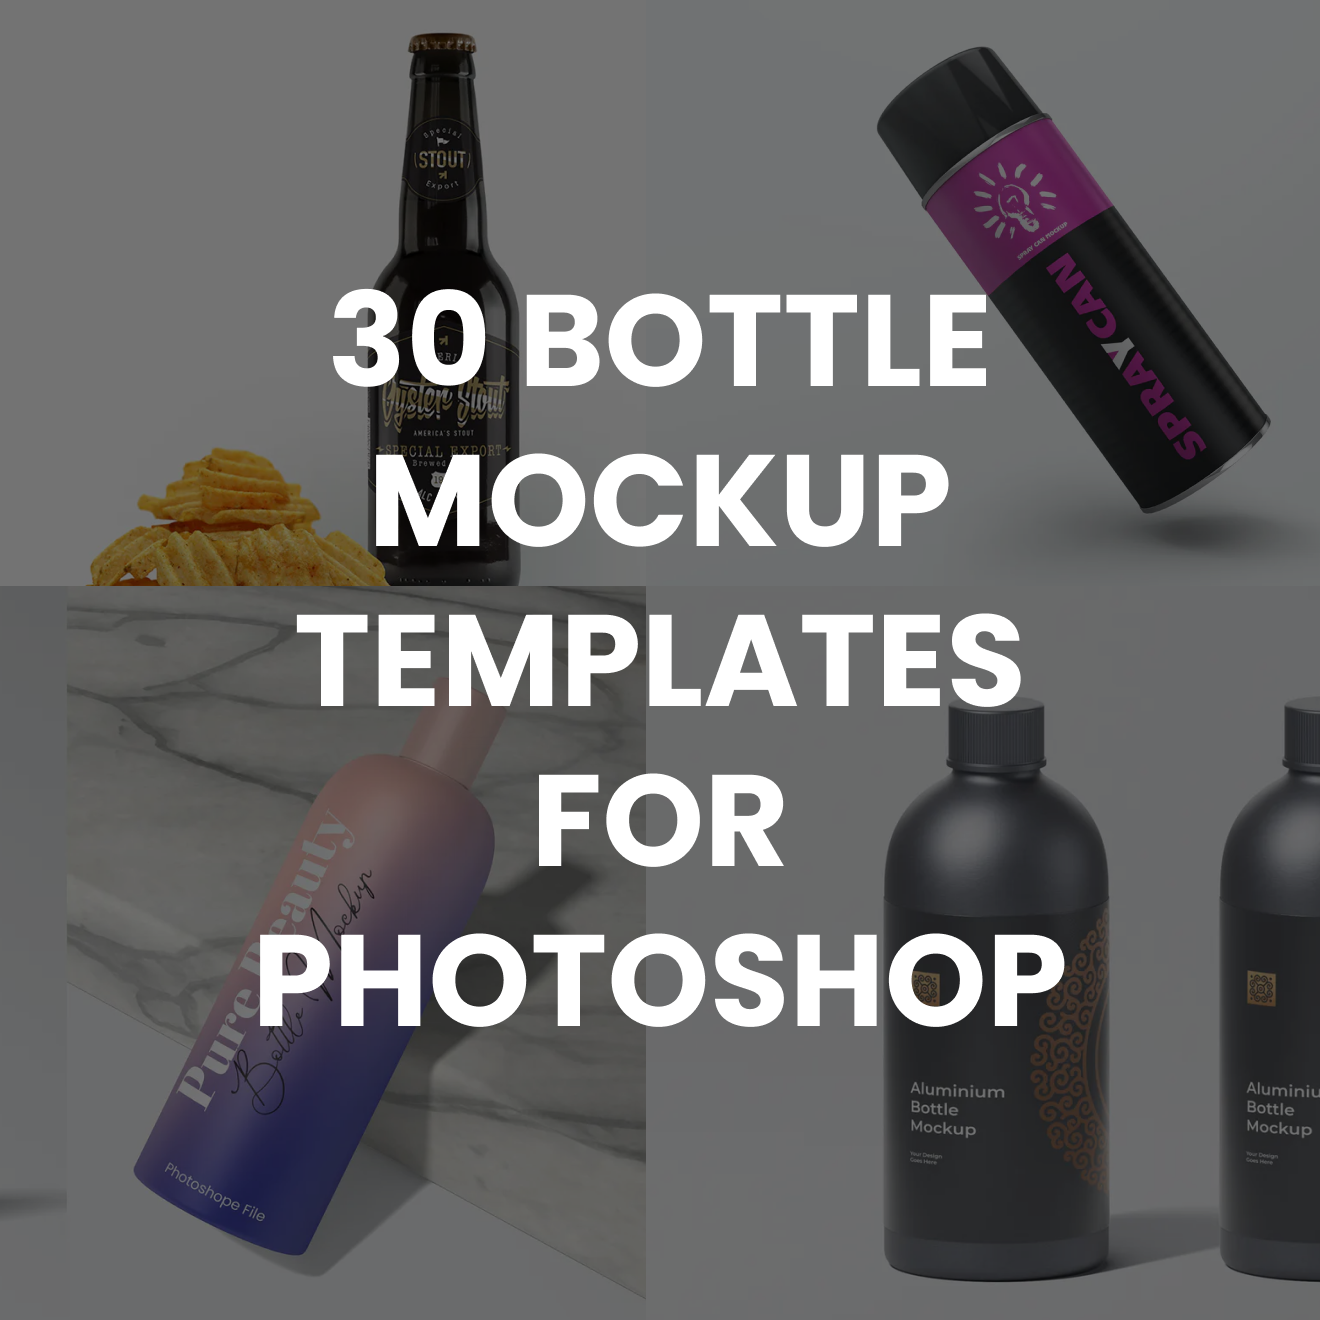 30 Bottle Mockup Templates for Photoshop